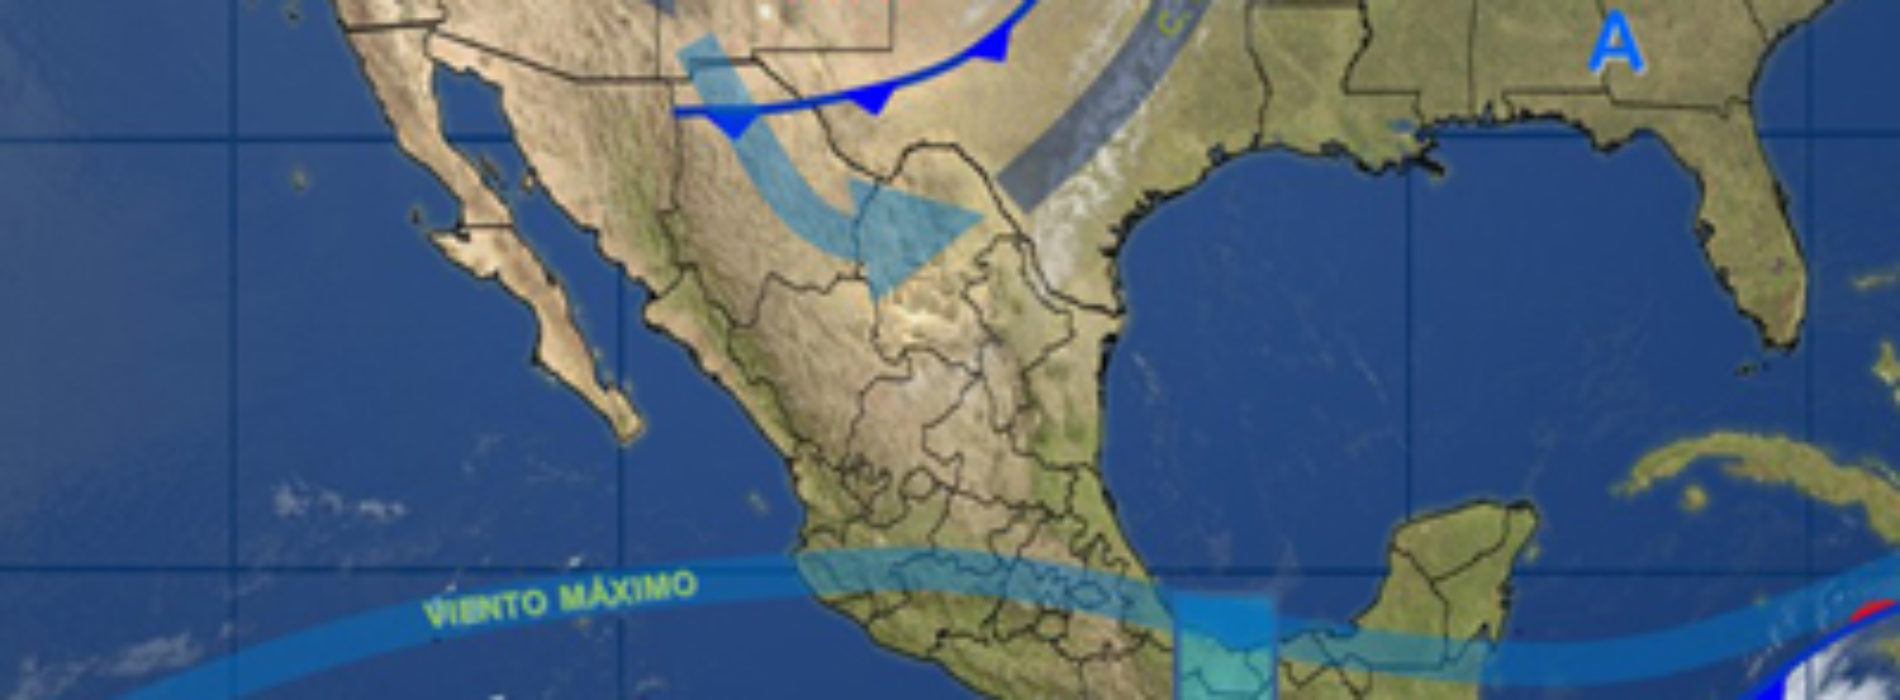 Prevén lluvias con intervalos de chubascos y ambiente cálido en Oaxaca